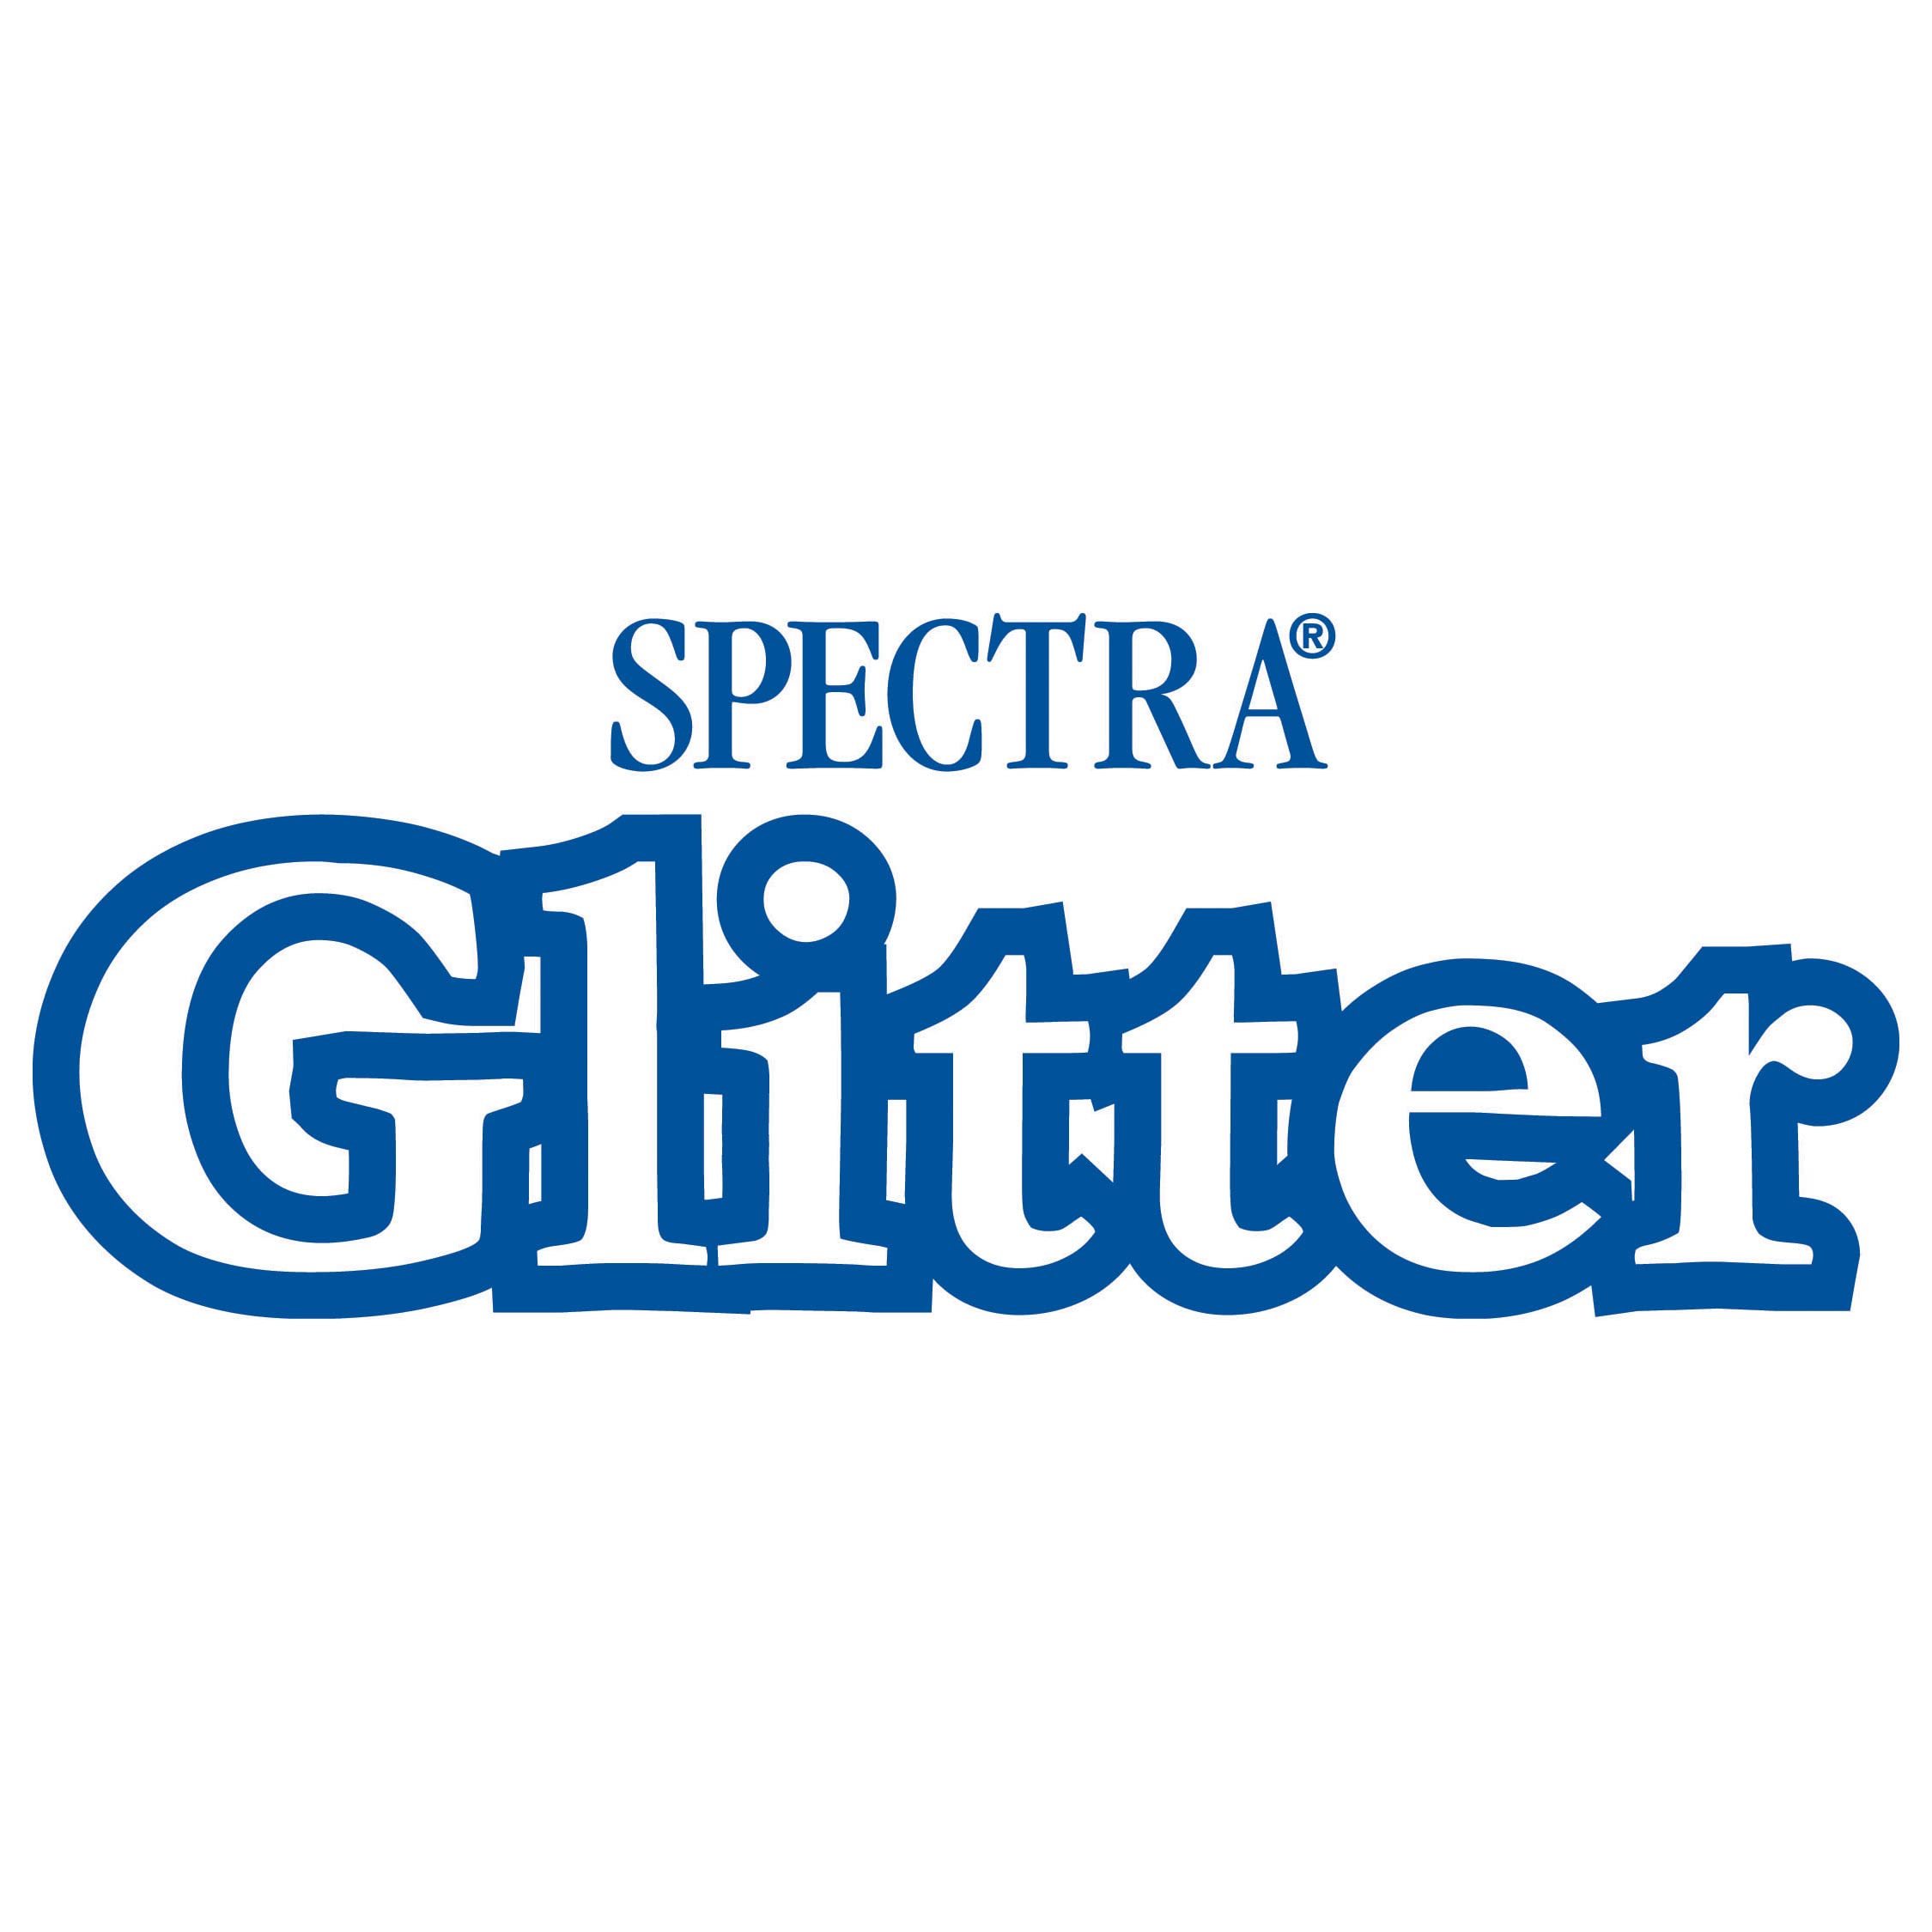 Spectra Arts & Crafts Glitter Assortment, 6 Assorted Colors, 4 oz., 6 Jars